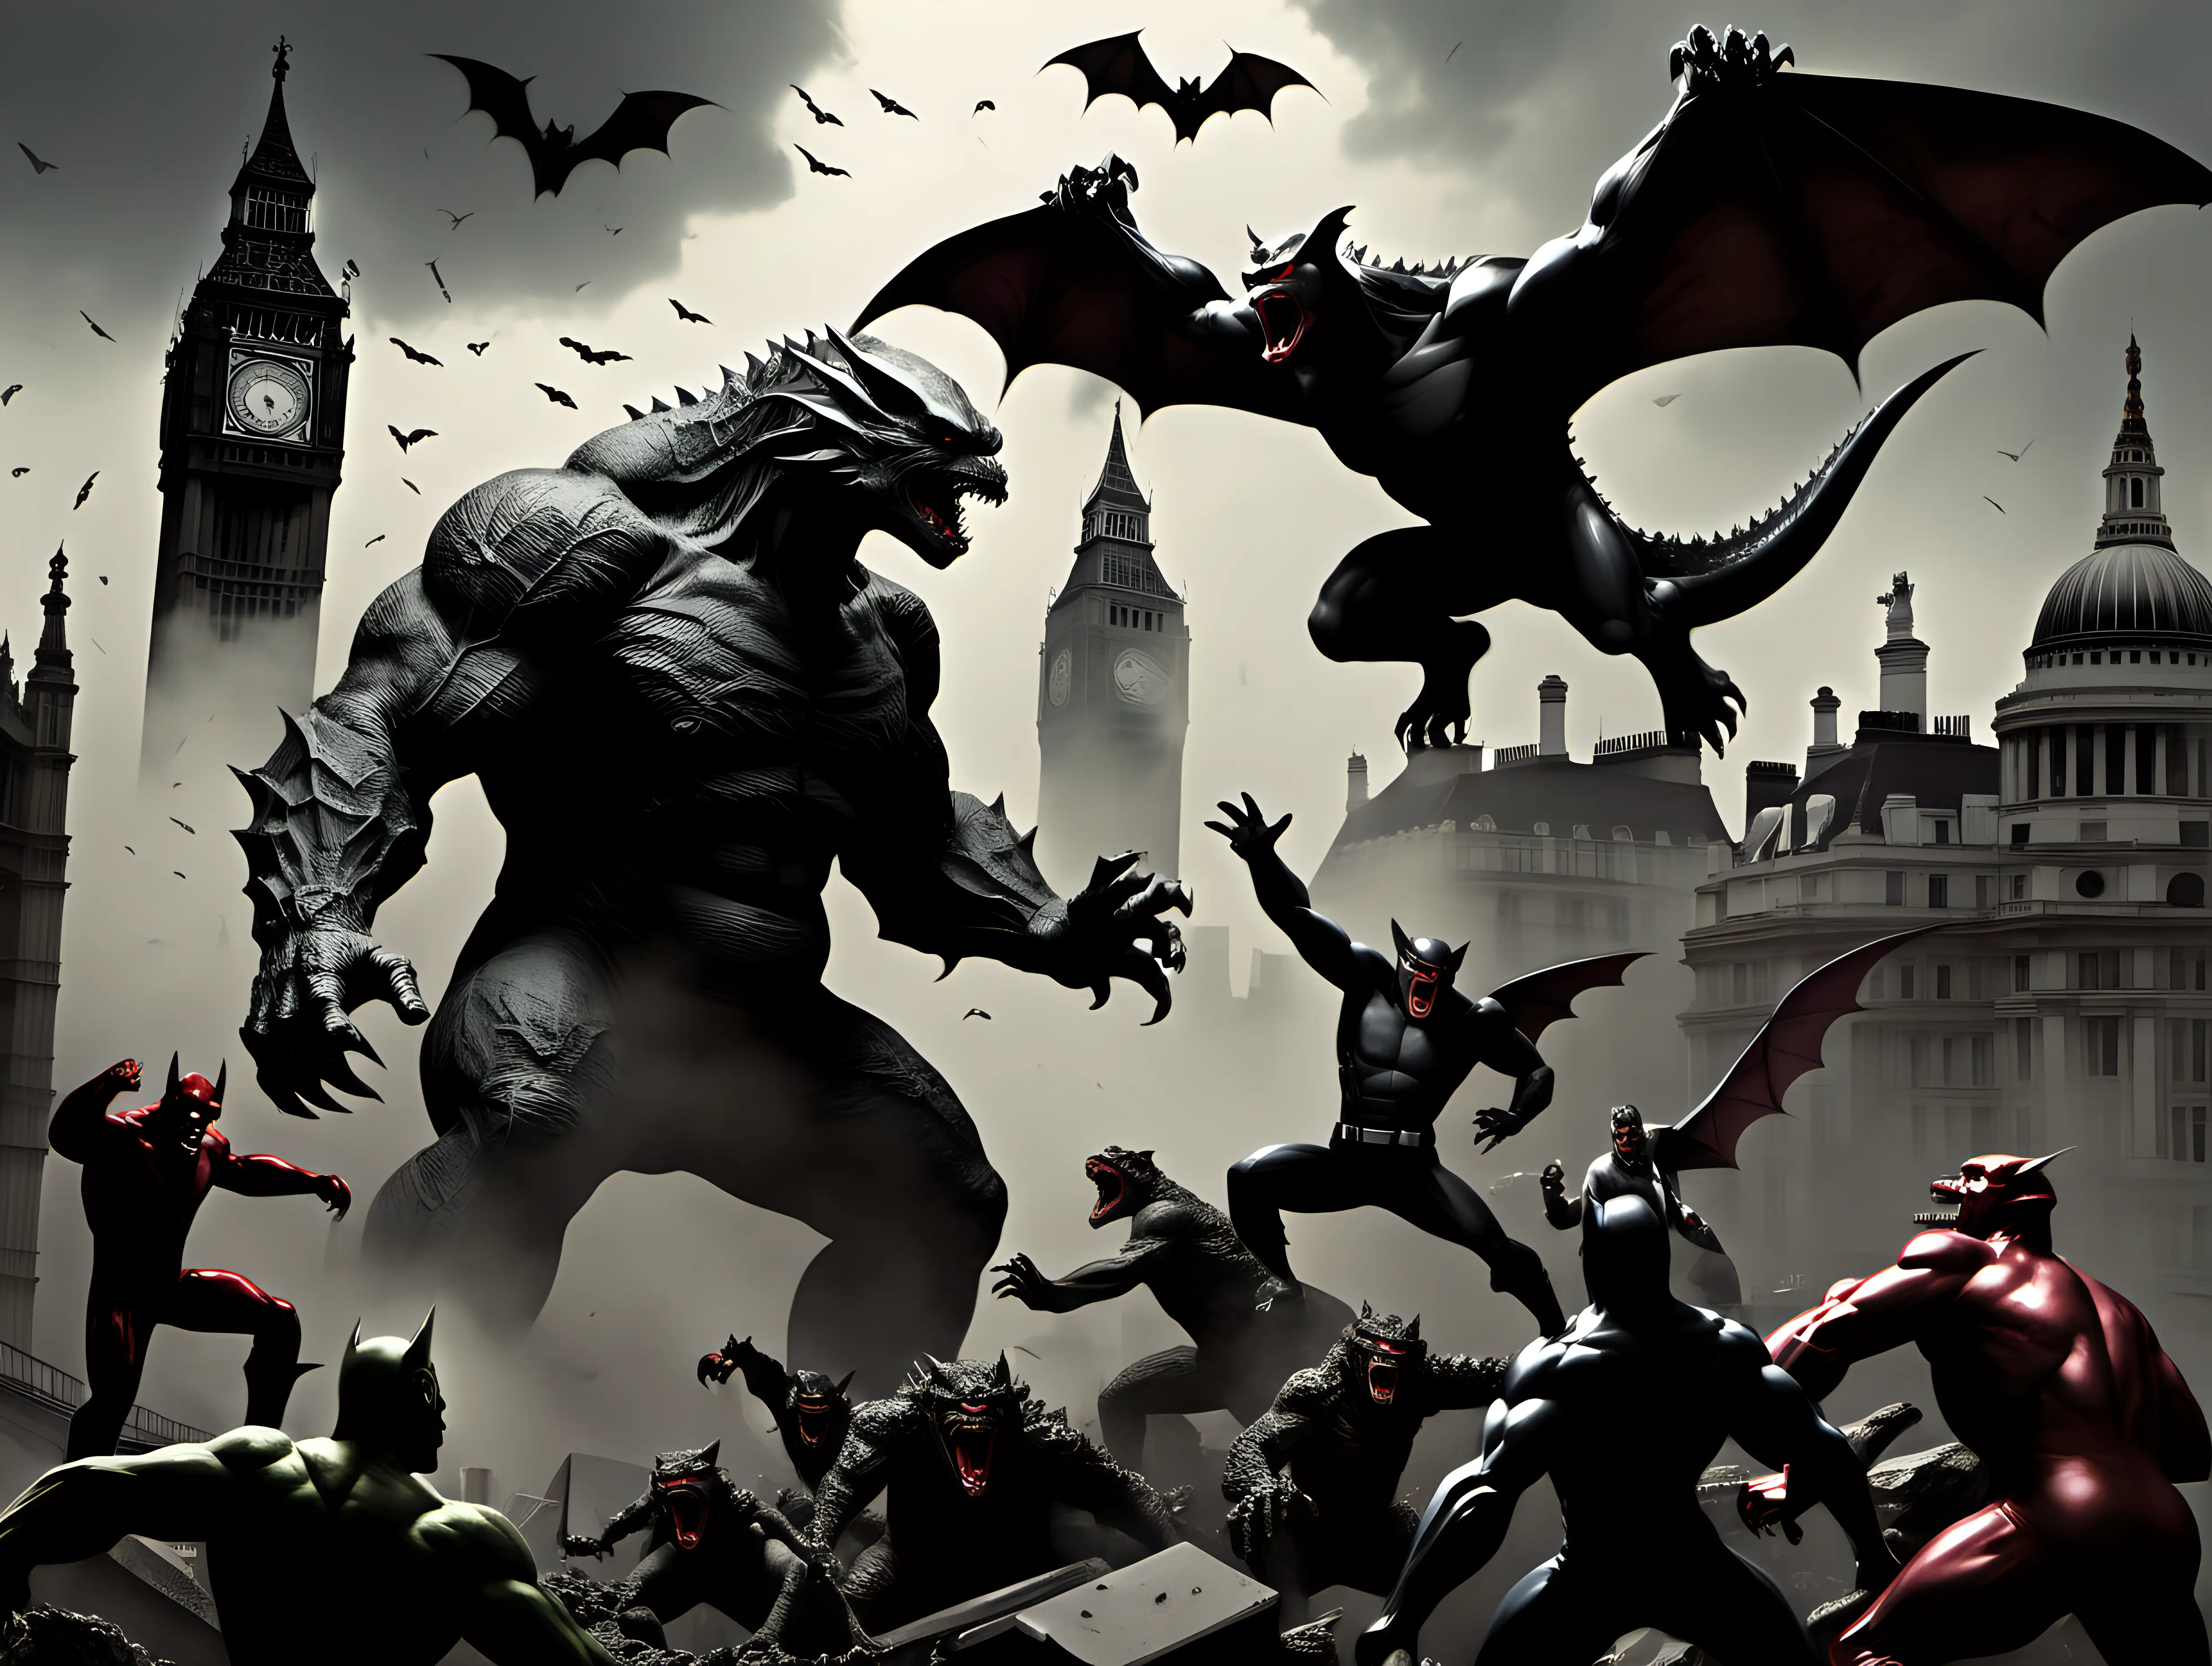 Epic Battle The Avengers Confront Godzilla and Vampire Bats in London Frank Frazetta Style